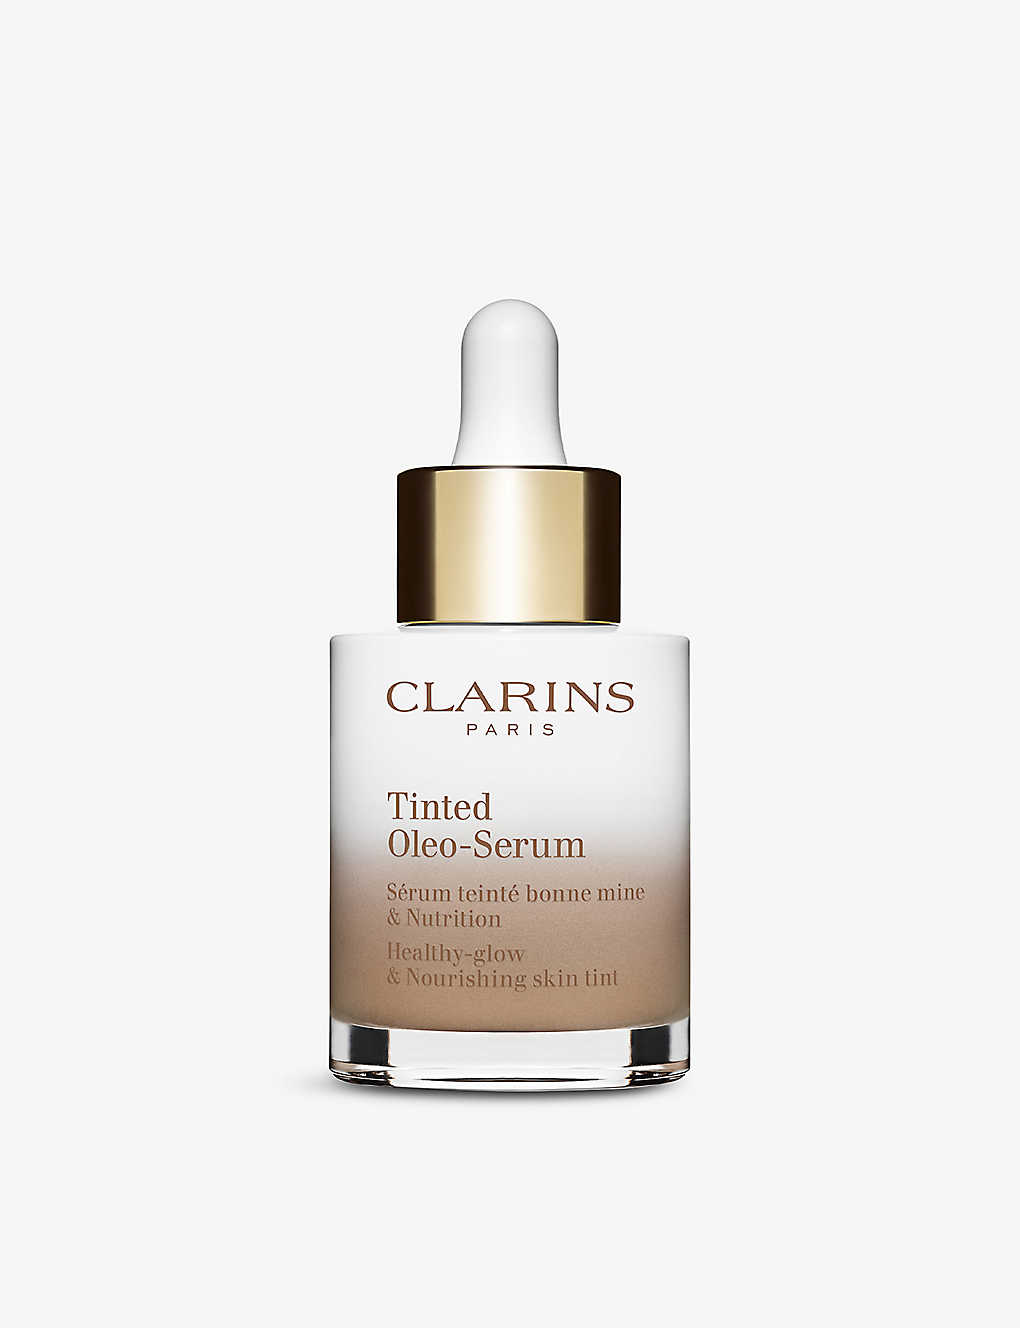 Clarins 6 Tinted Oleo-serum 01 Skin Tint 30ml